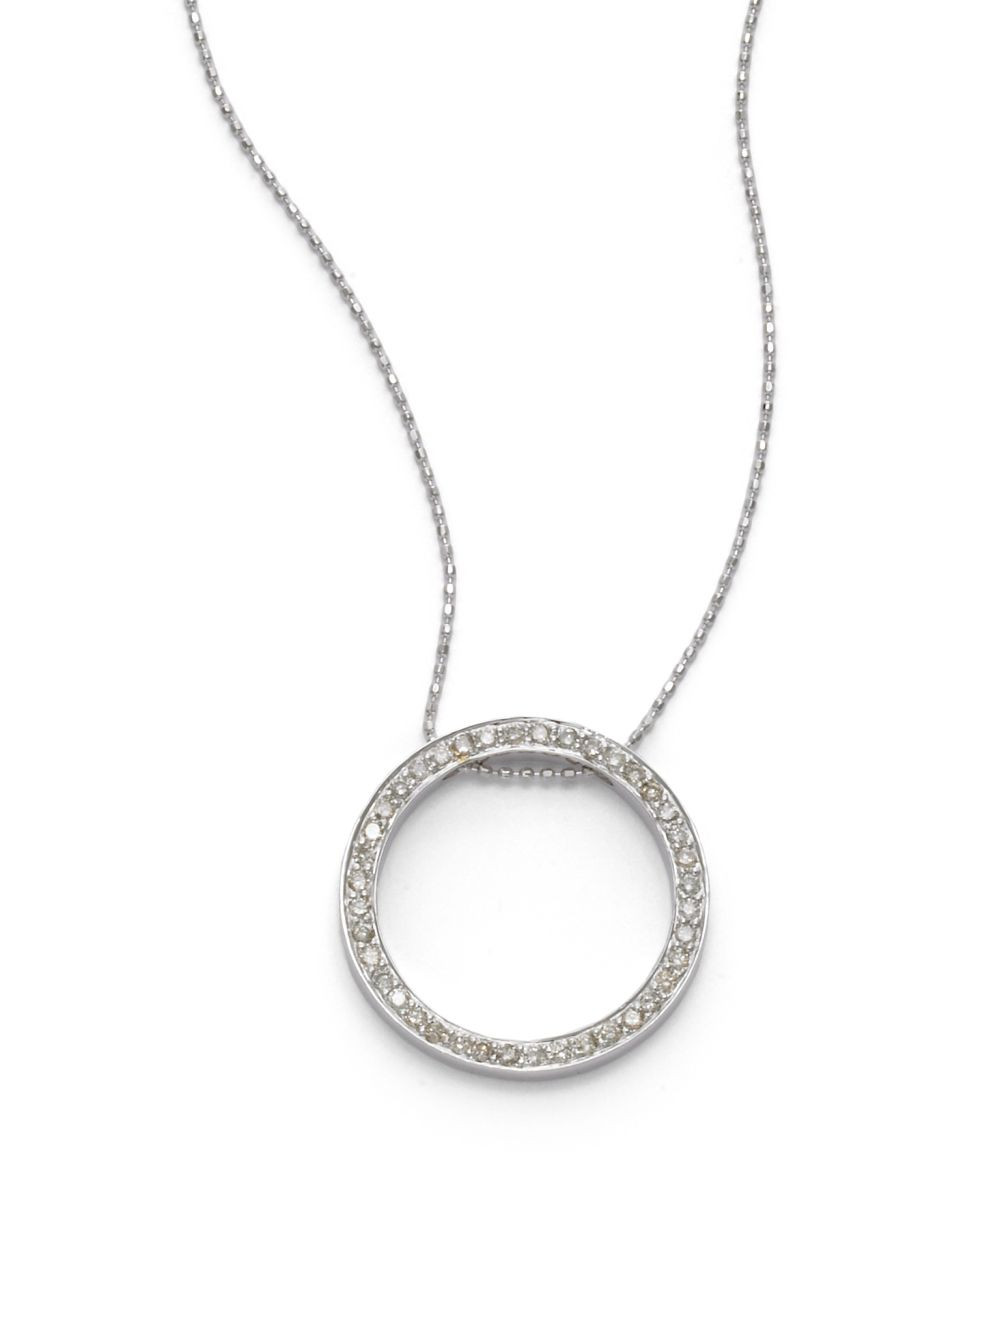 White Gold Necklace With Pendant
 Sydney Evan Diamond 14k White Gold Eternity Pendant